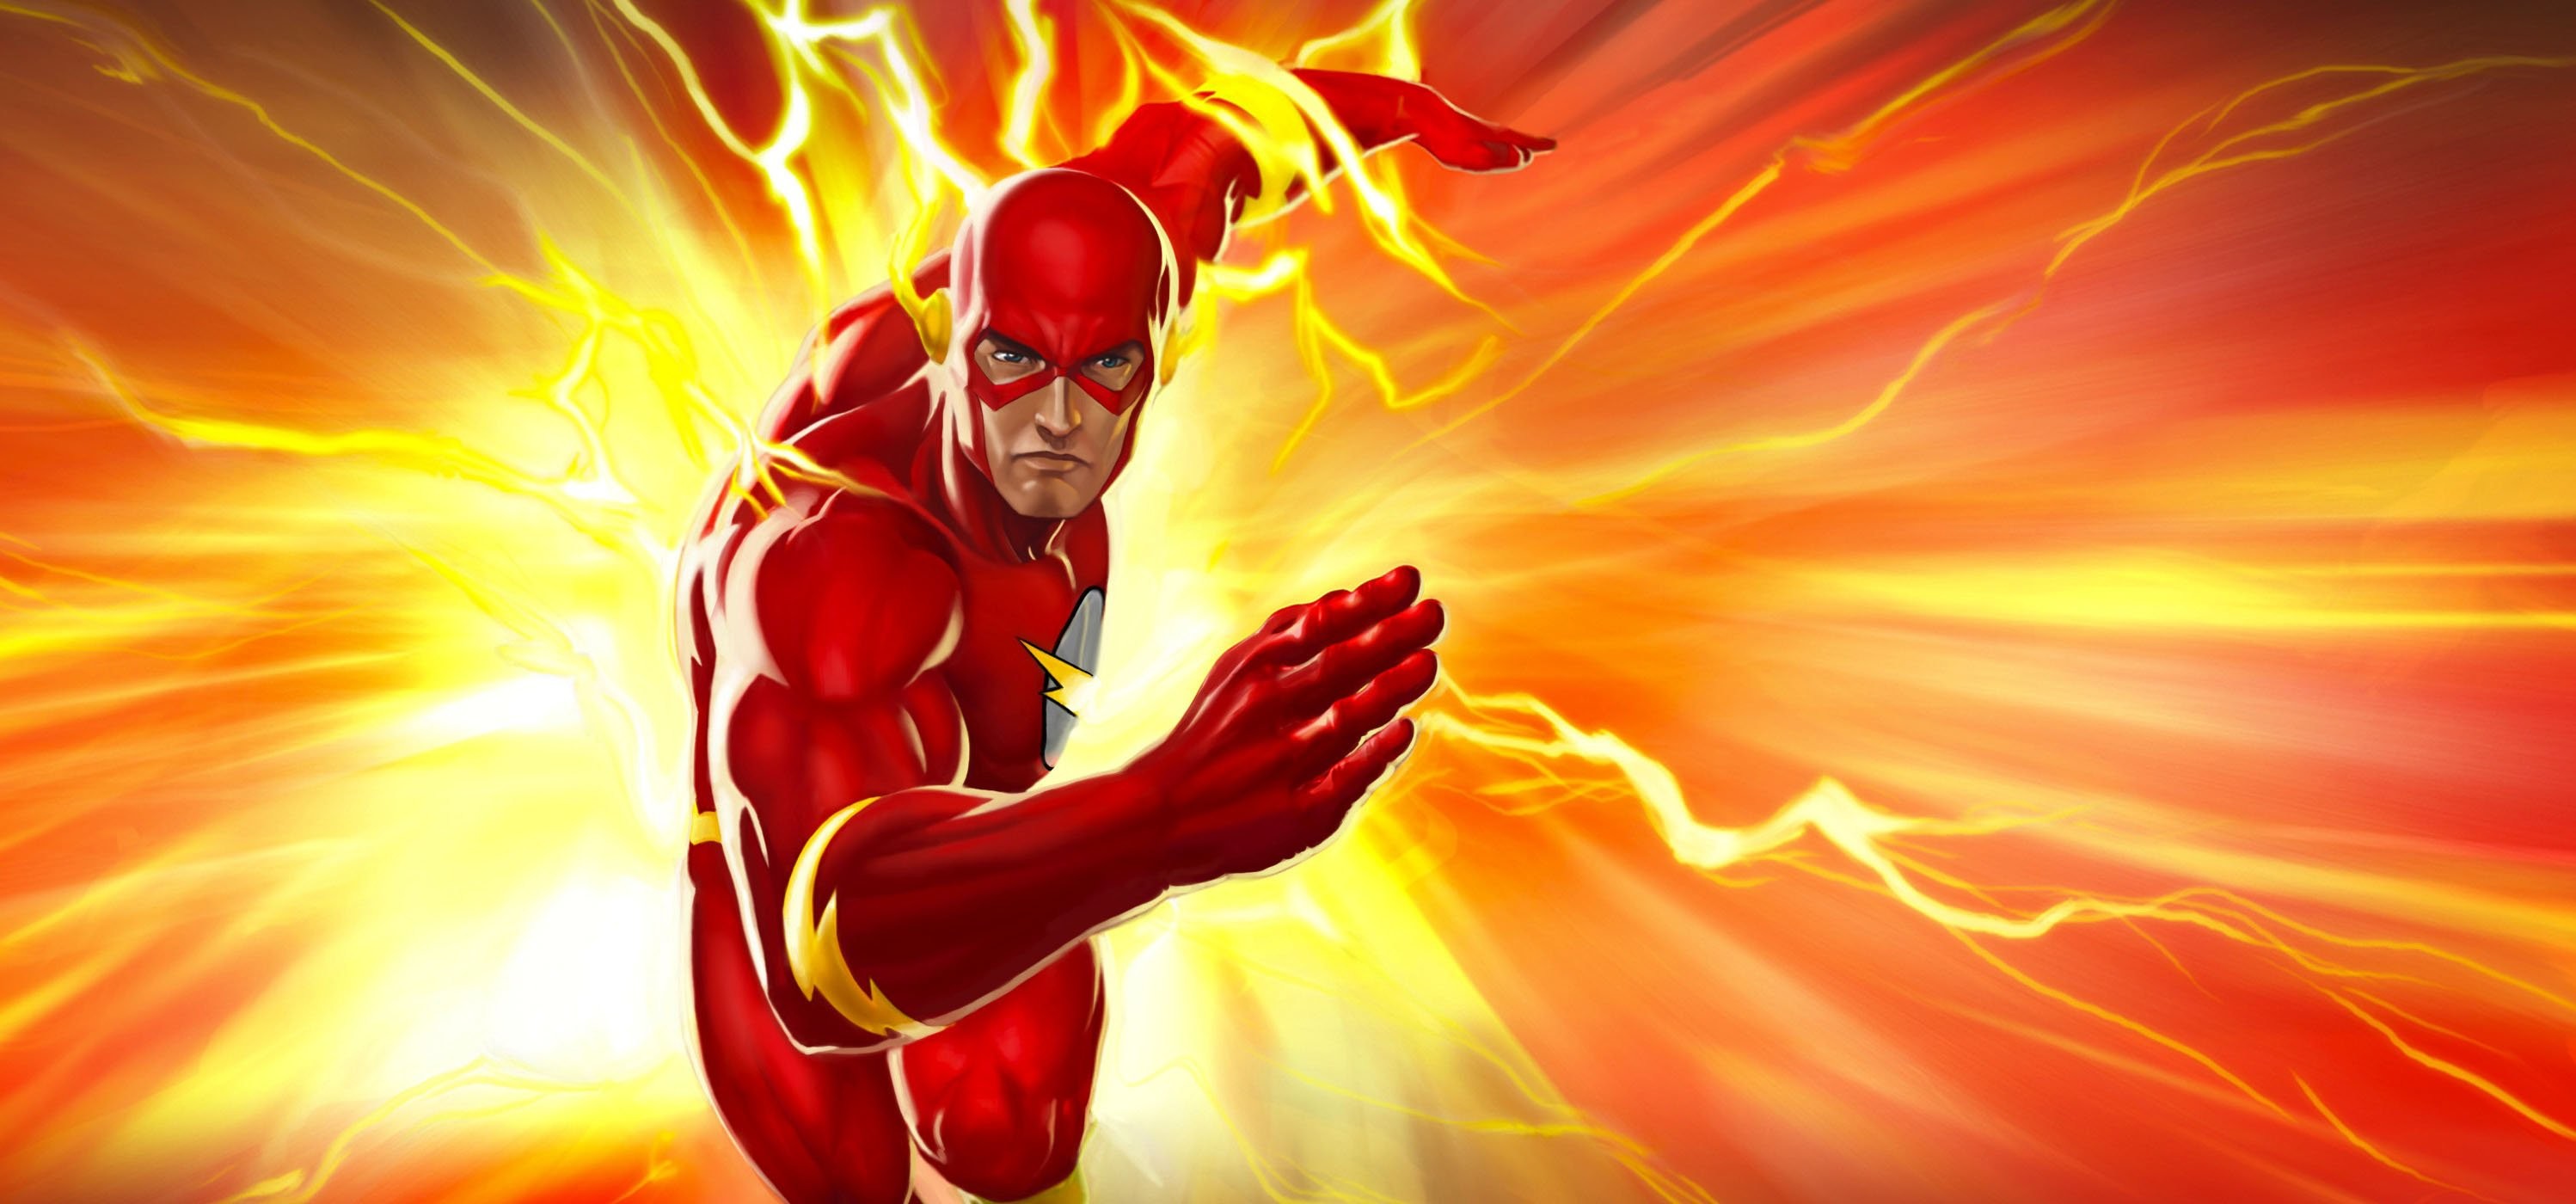 2996x1400, The Flash Superhero Drama Action Series - Super Hero Flash , HD Wallpaper & Backgrounds